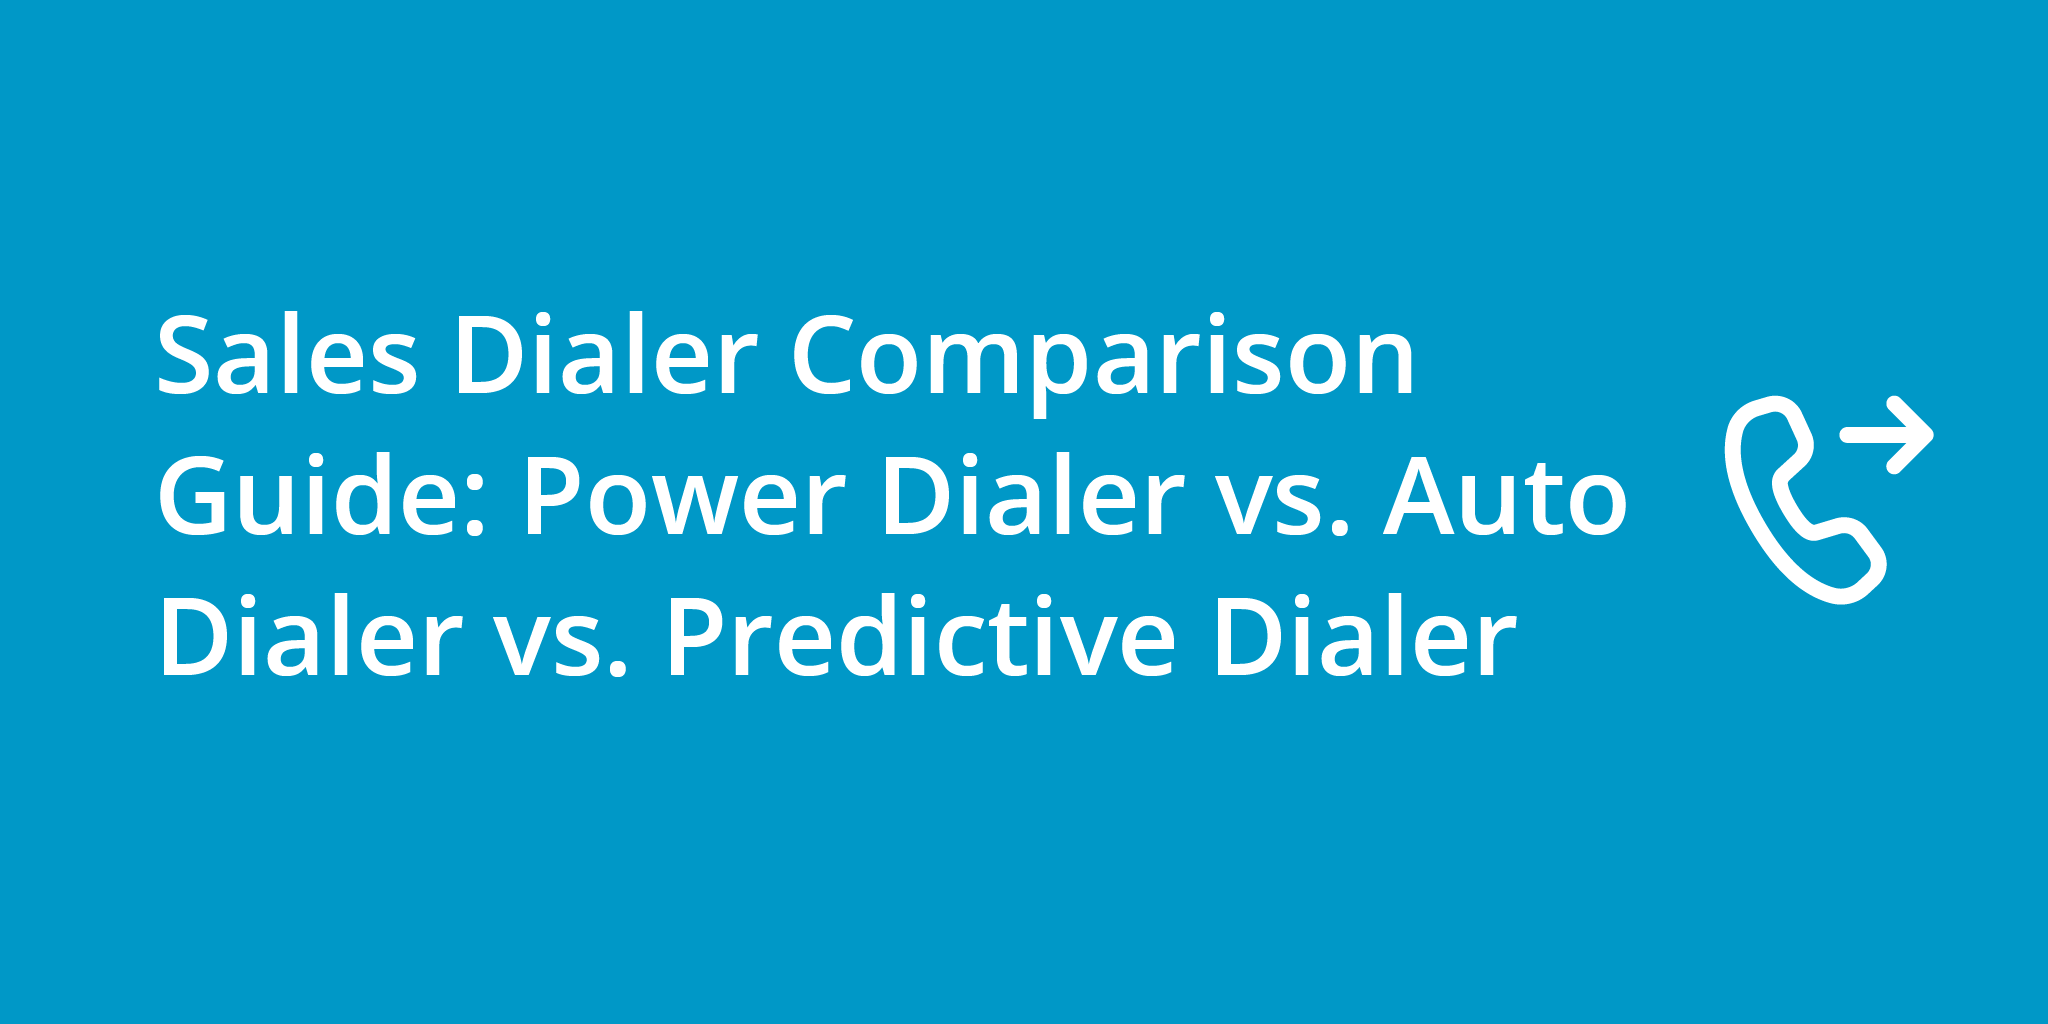 Sales Dialer Comparison Guide: Power Dialer vs Auto Dialer vs Predictive Dialer